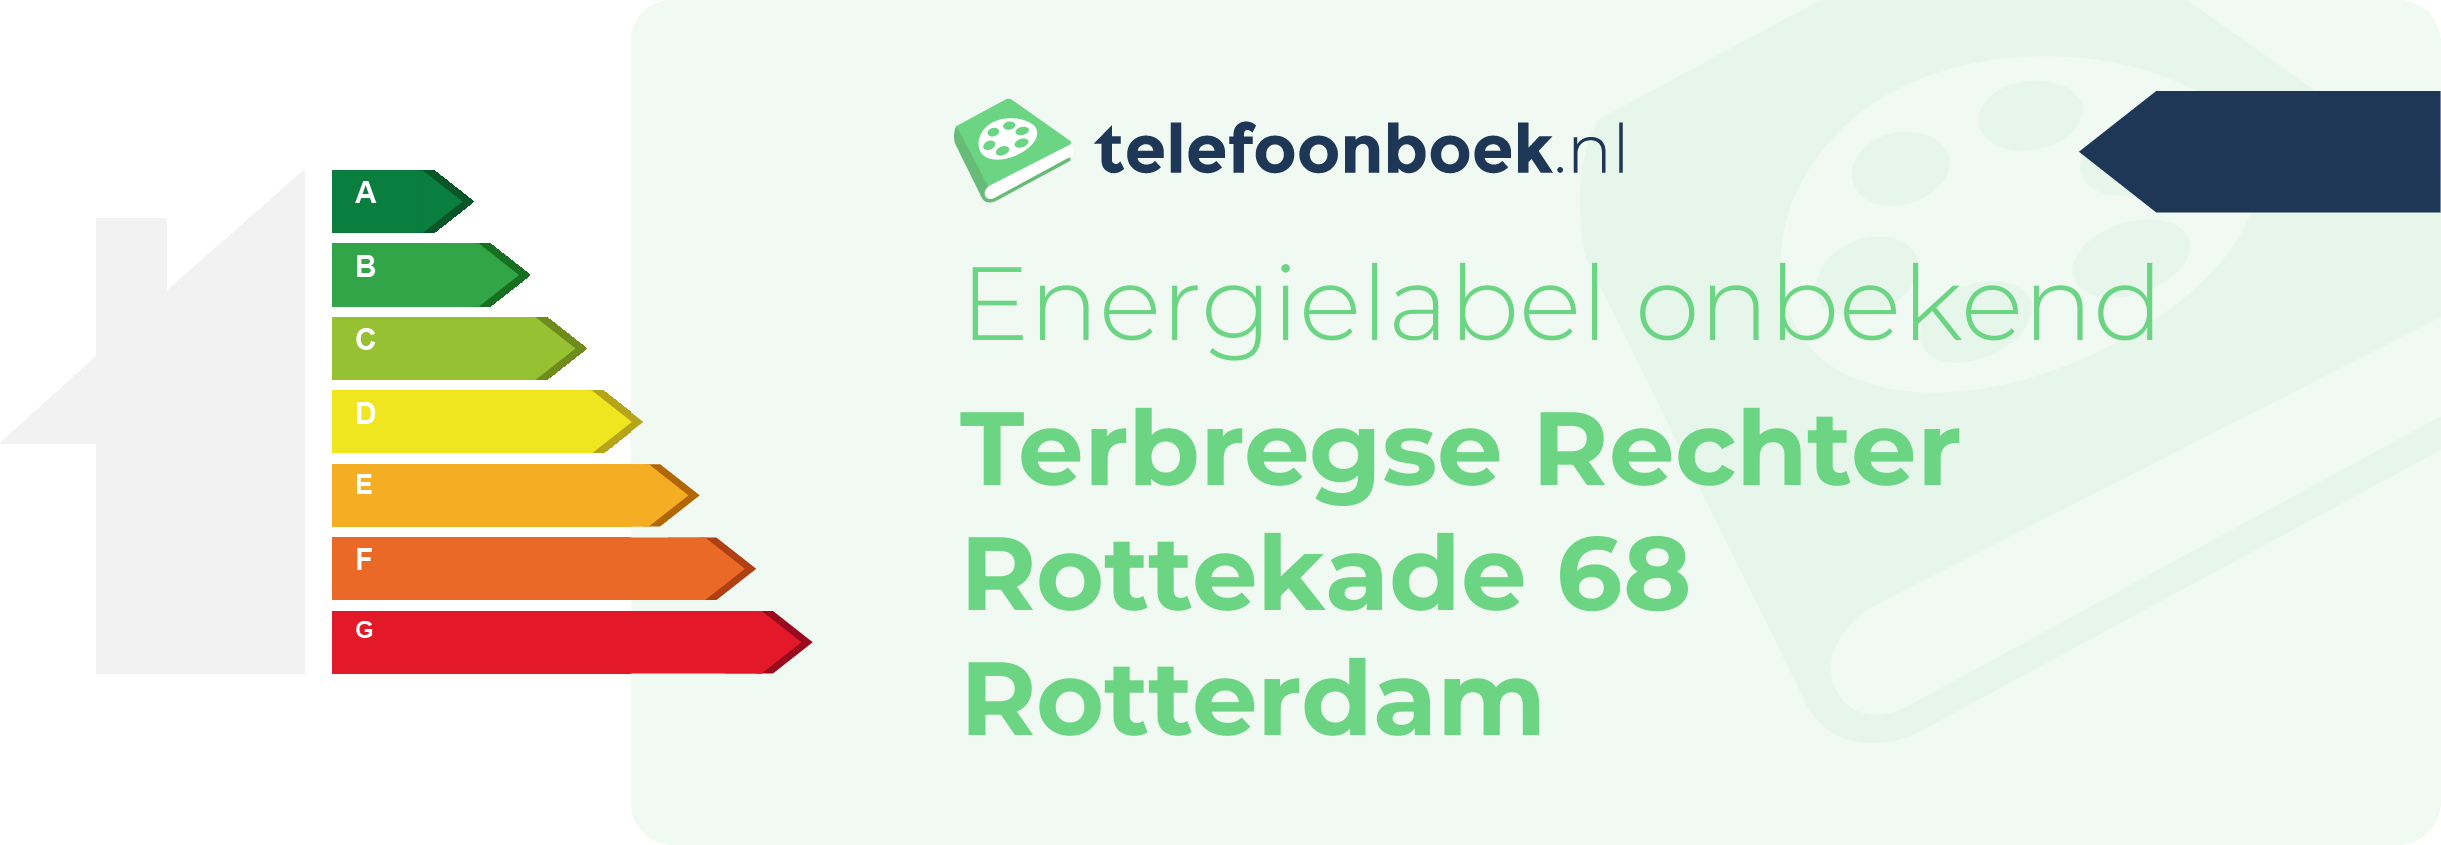 Energielabel Terbregse Rechter Rottekade 68 Rotterdam